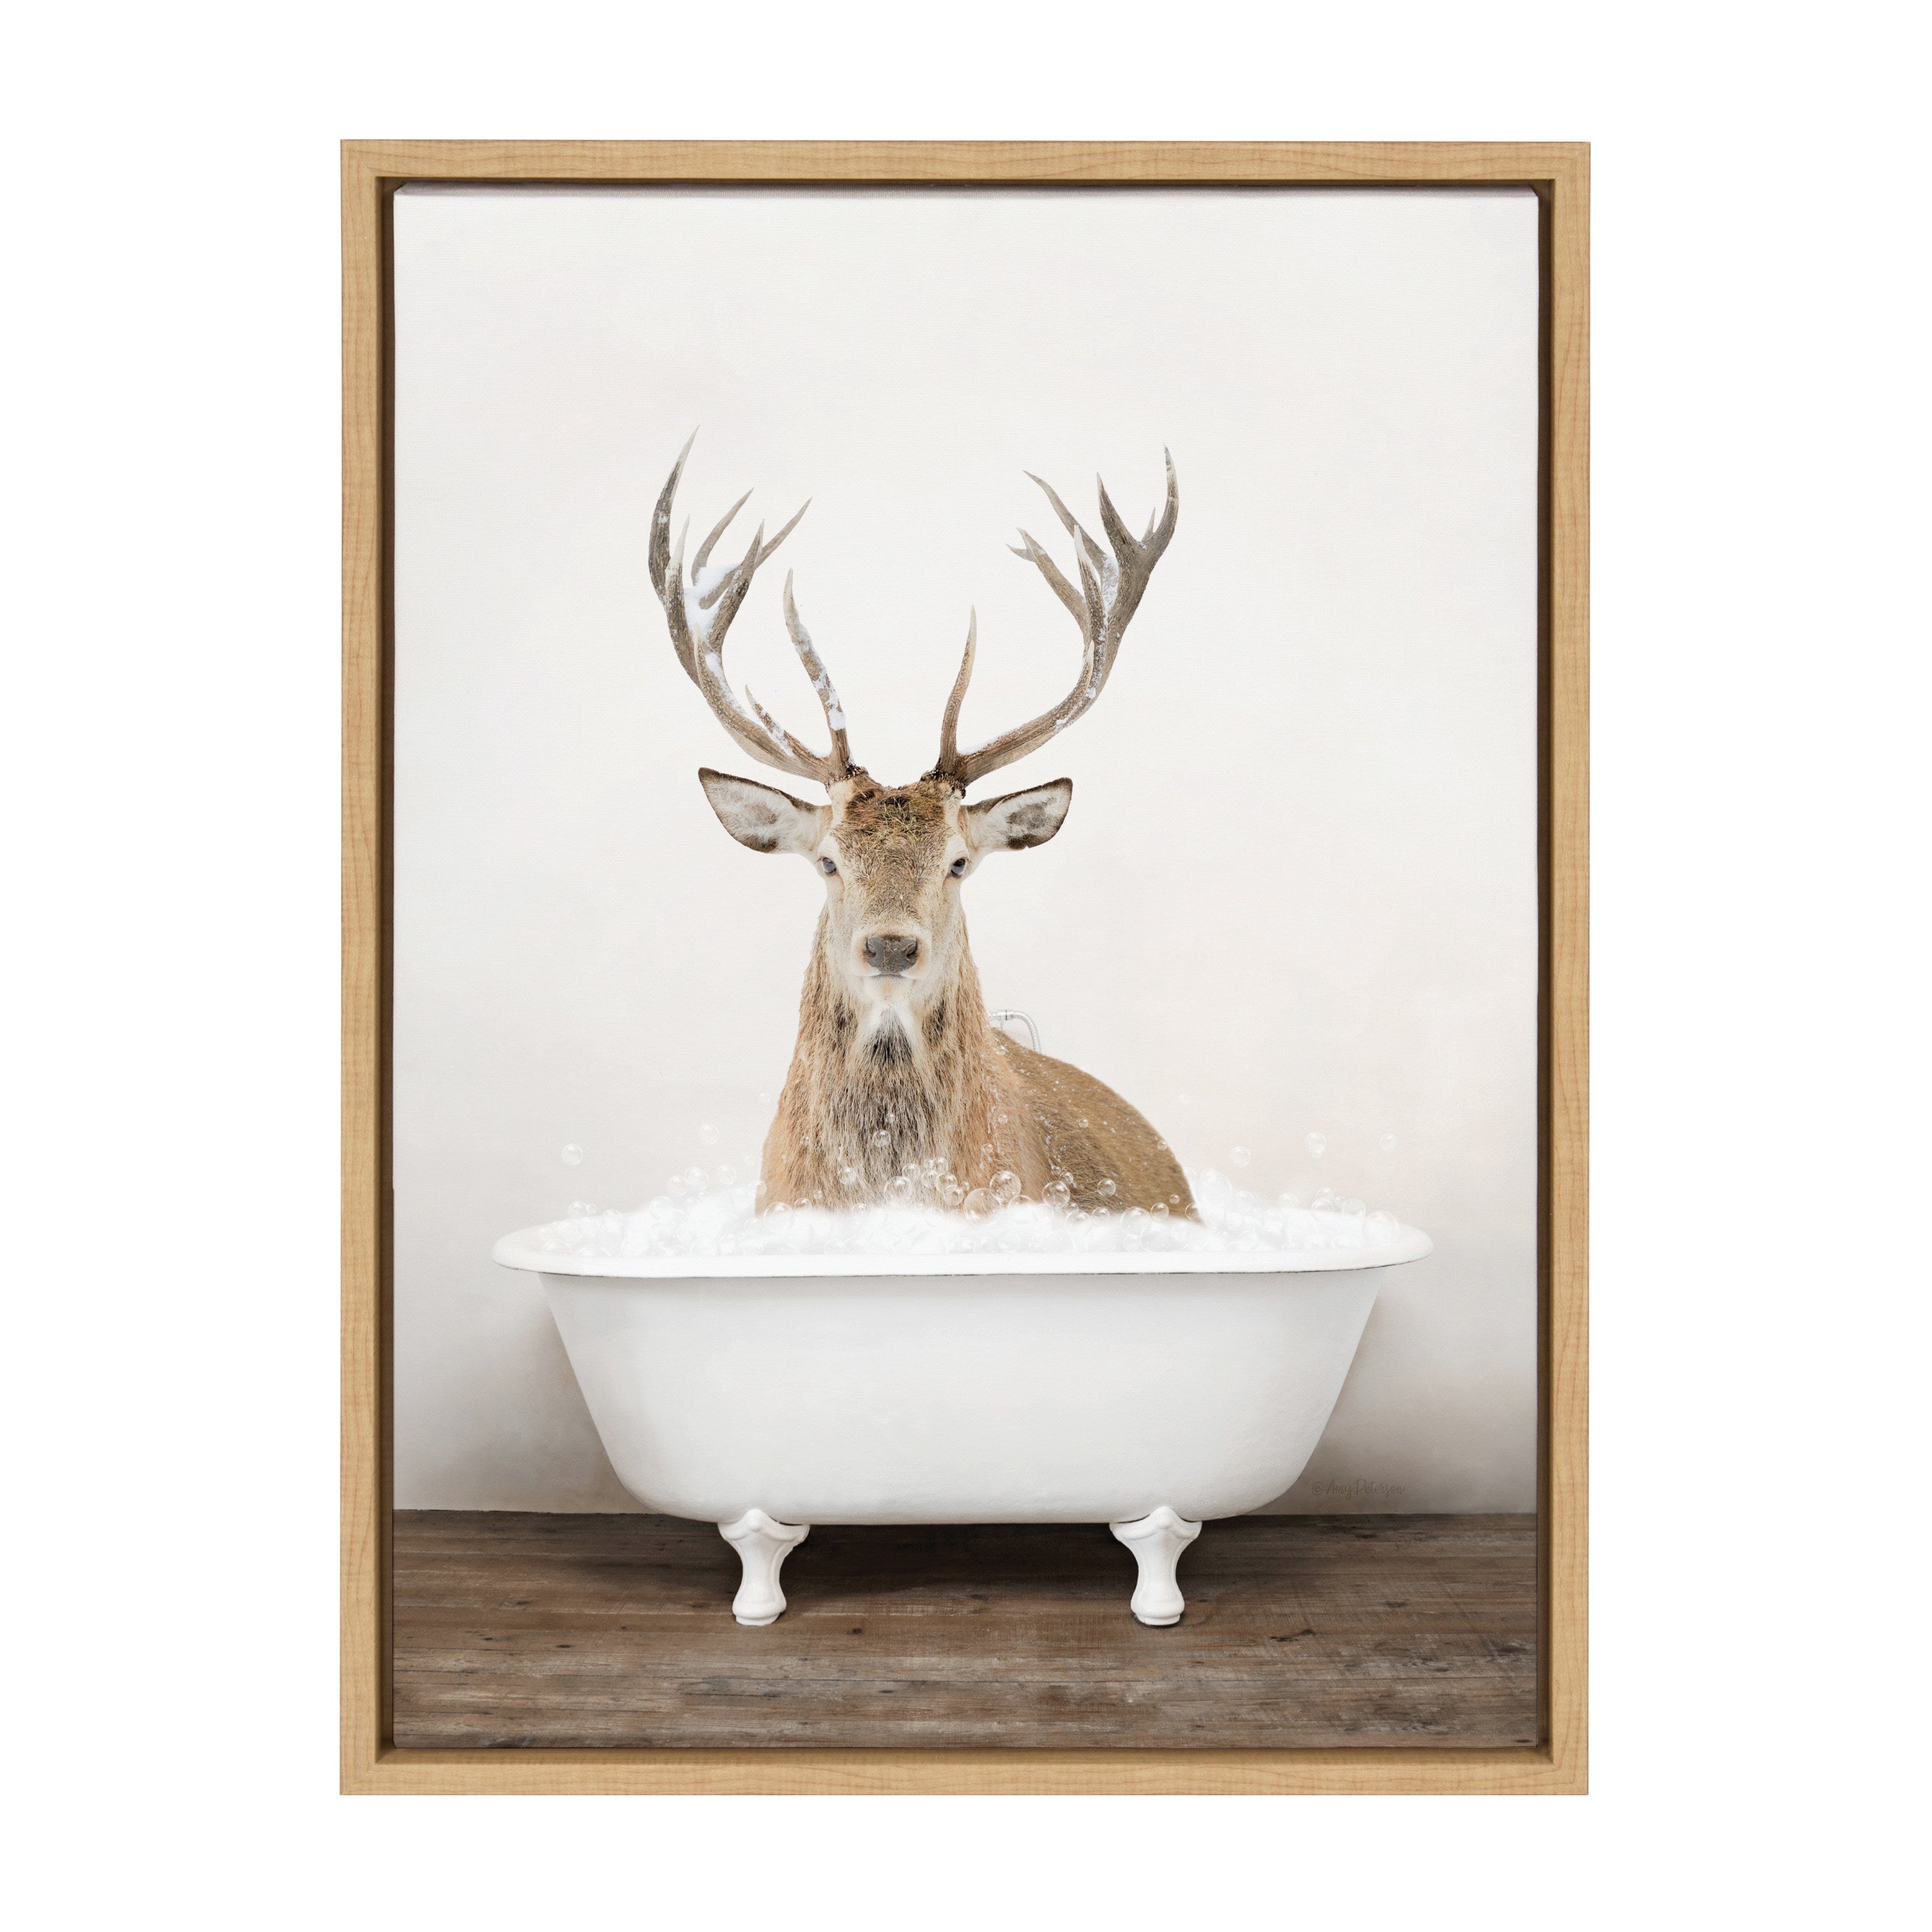 Sylvie Male Deer in Rustic Bath Framed Canvas by Amy Peterson Art Studio